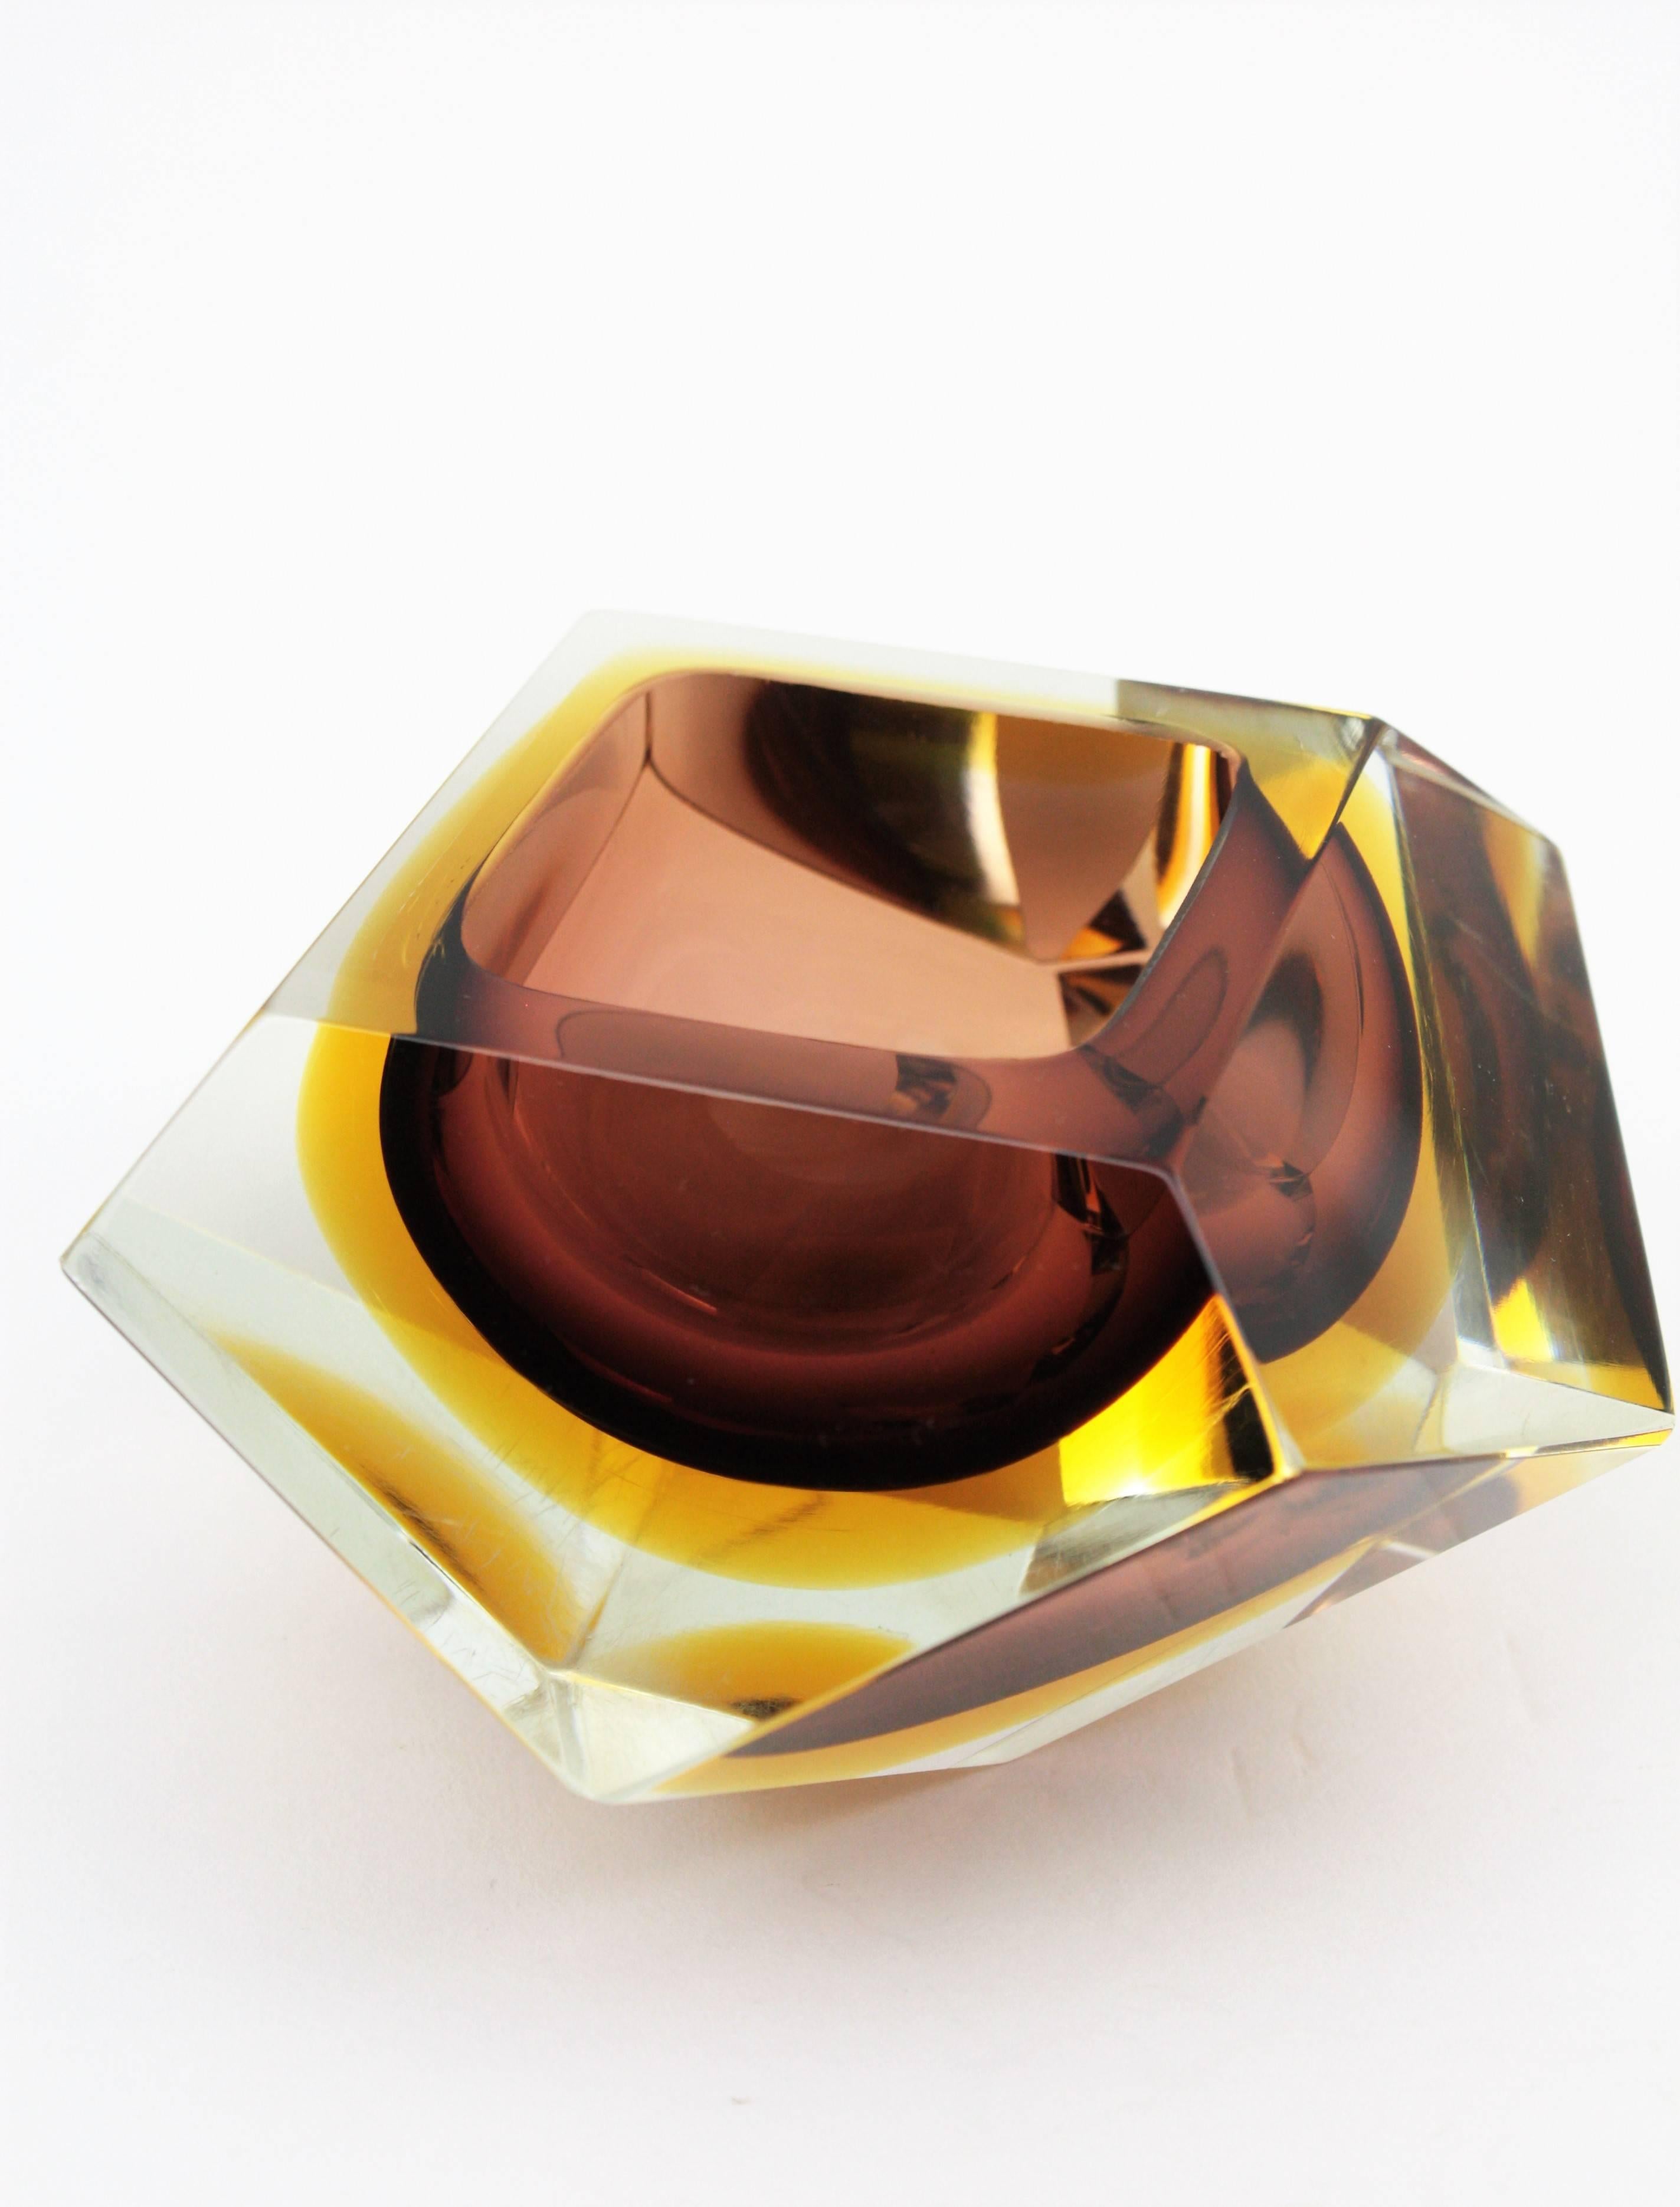 Italian Large Flavio Poli Brown & Amber Sommerso Diamond Shape Faceted Murano Glass Bowl